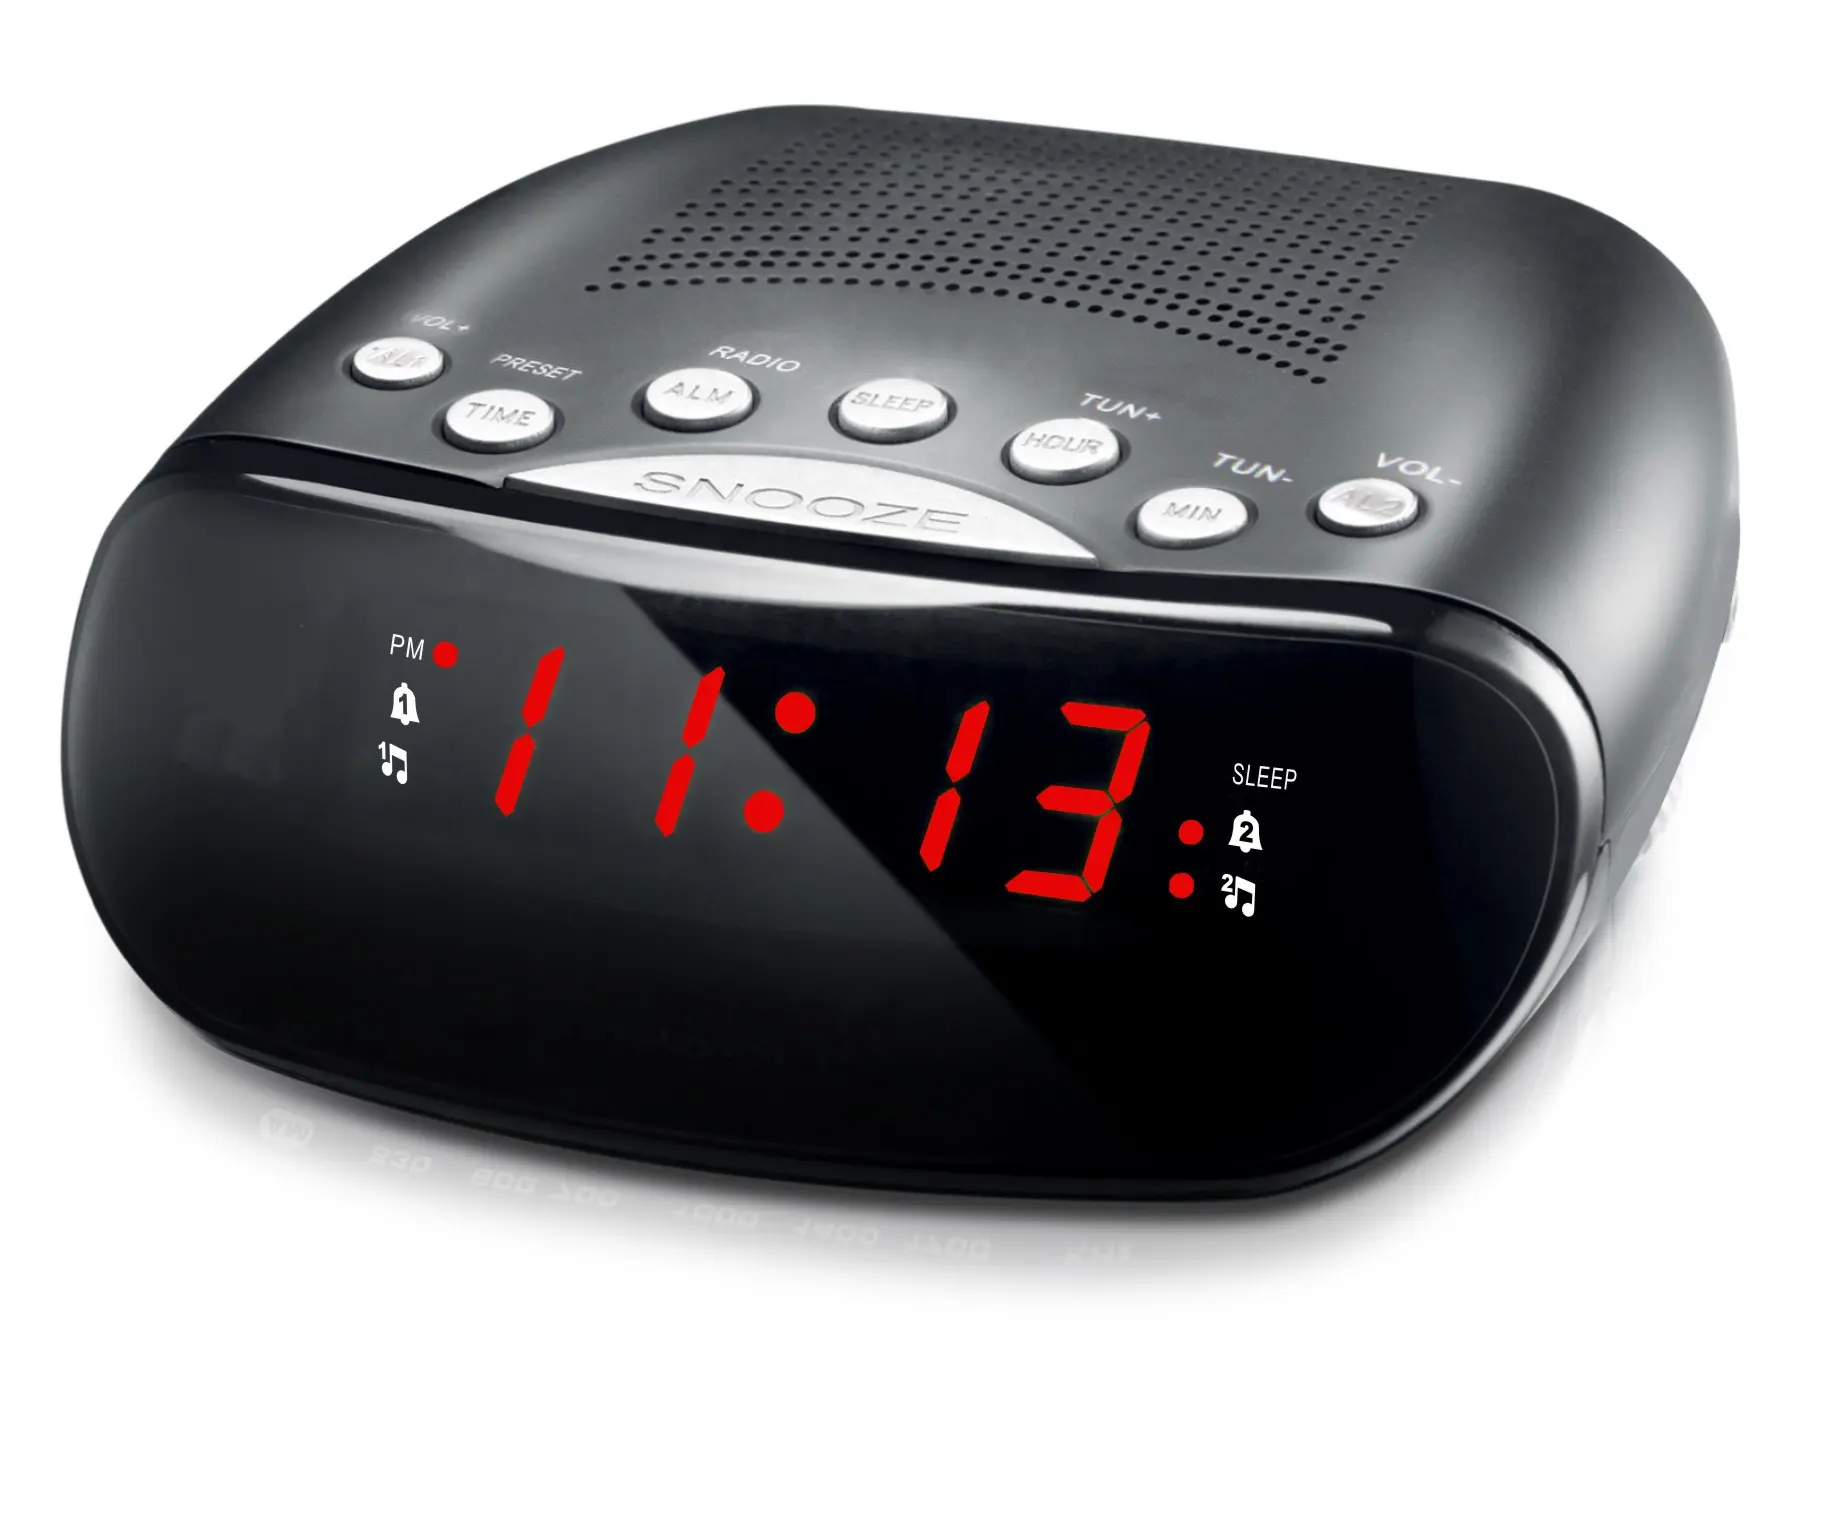 FM radio laser Projection alarm clock, alarm clock projector FM radio laser Projection alarm clock countdown timer, alarm